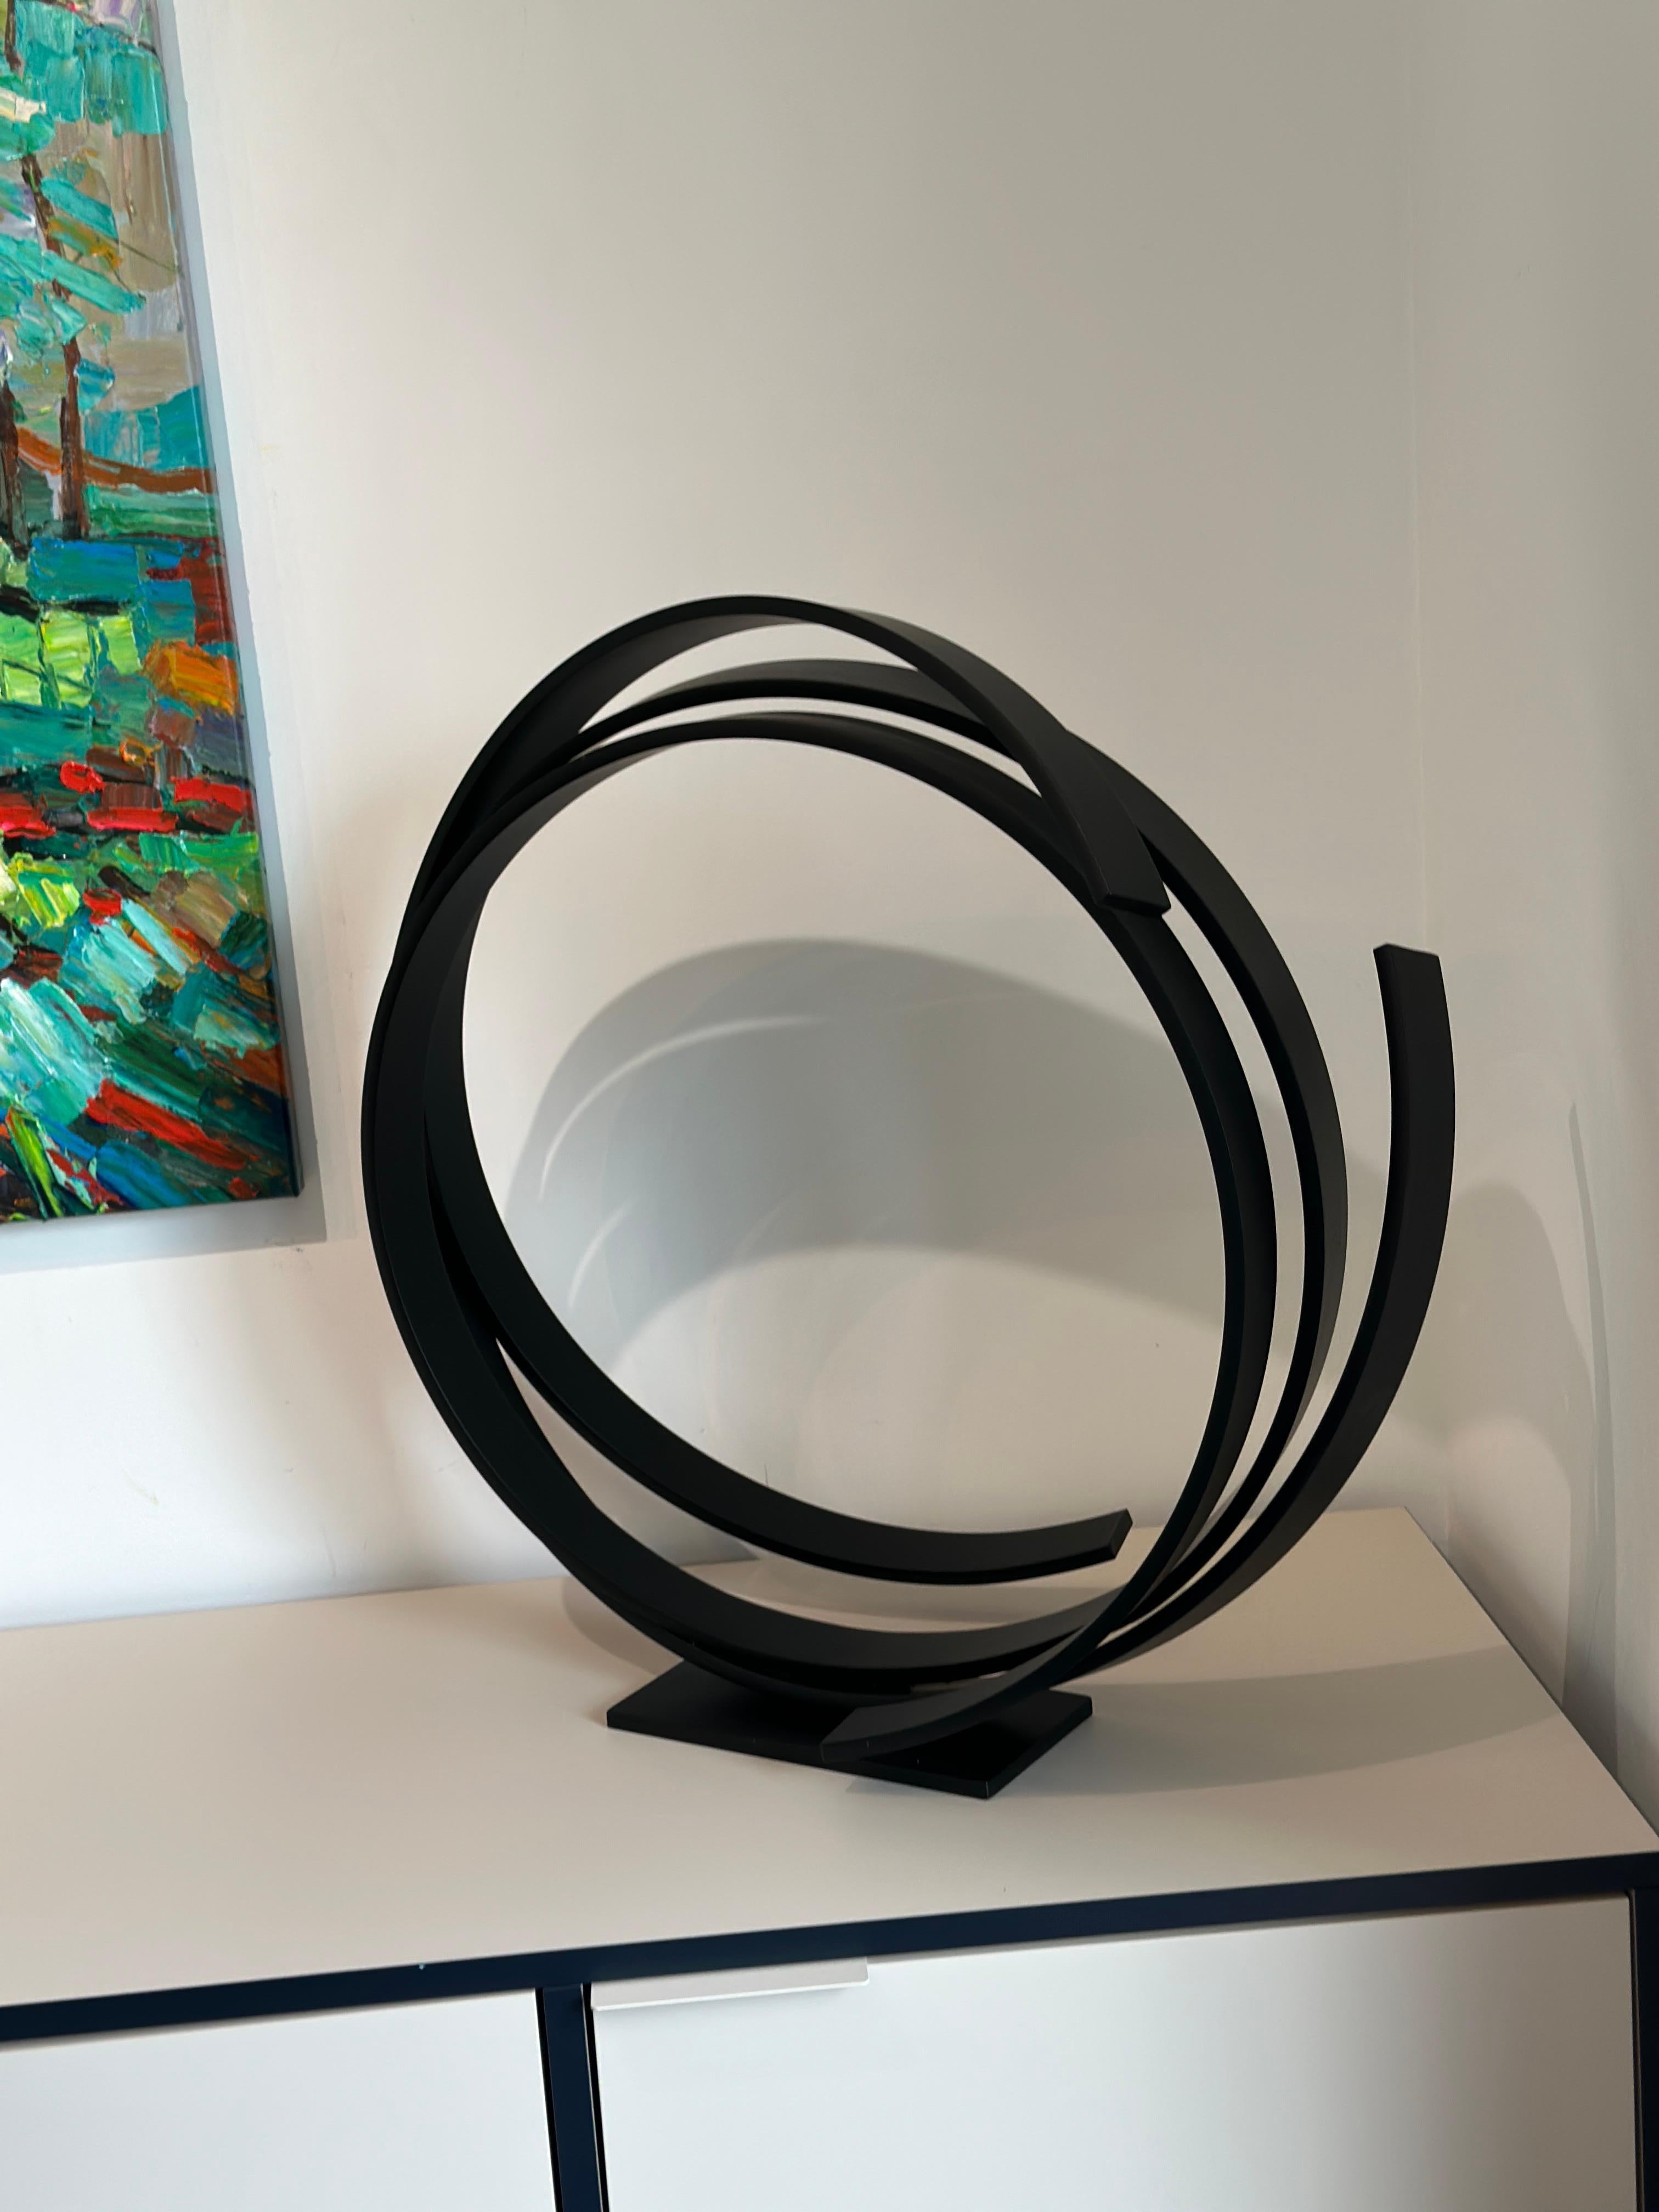 Black Orbit by Kuno Vollet - Large Contemporary Round Orbit sculpture  For Sale 11